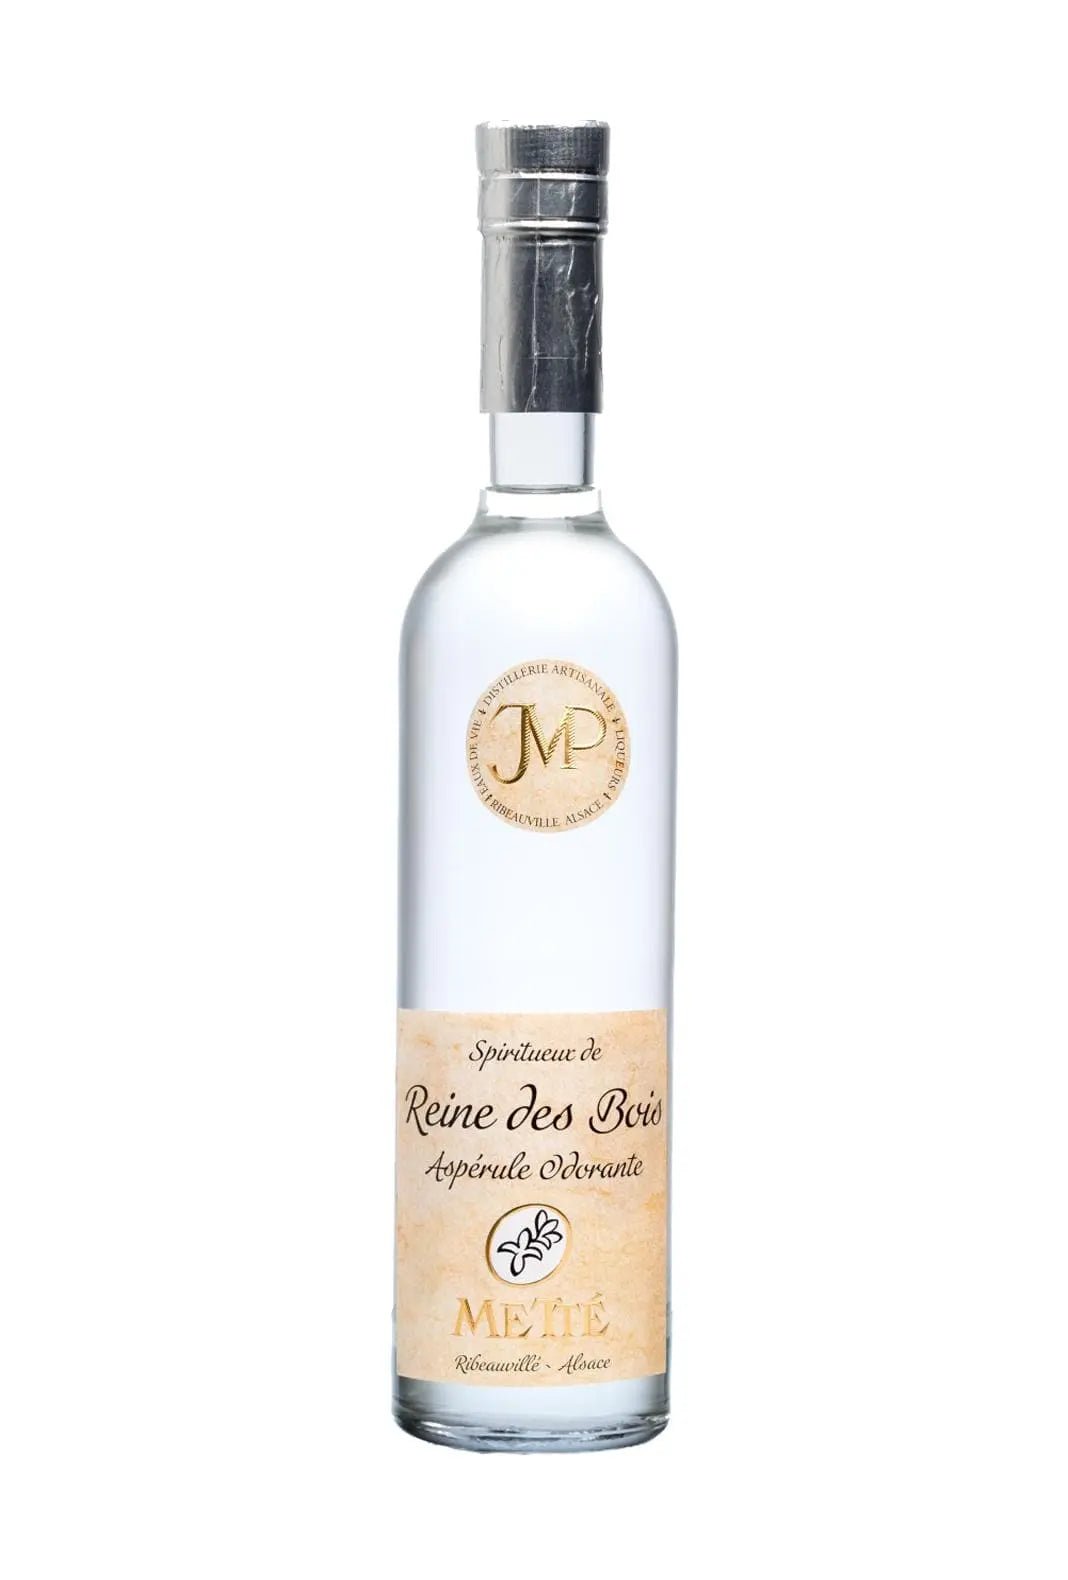 Mette Eau de Vie Asperule Odorante - Reine des Bois (Sweetscented Bedstraw spirit) 45% 350ml - Liquor & Spirits - Liquor Wine Cave